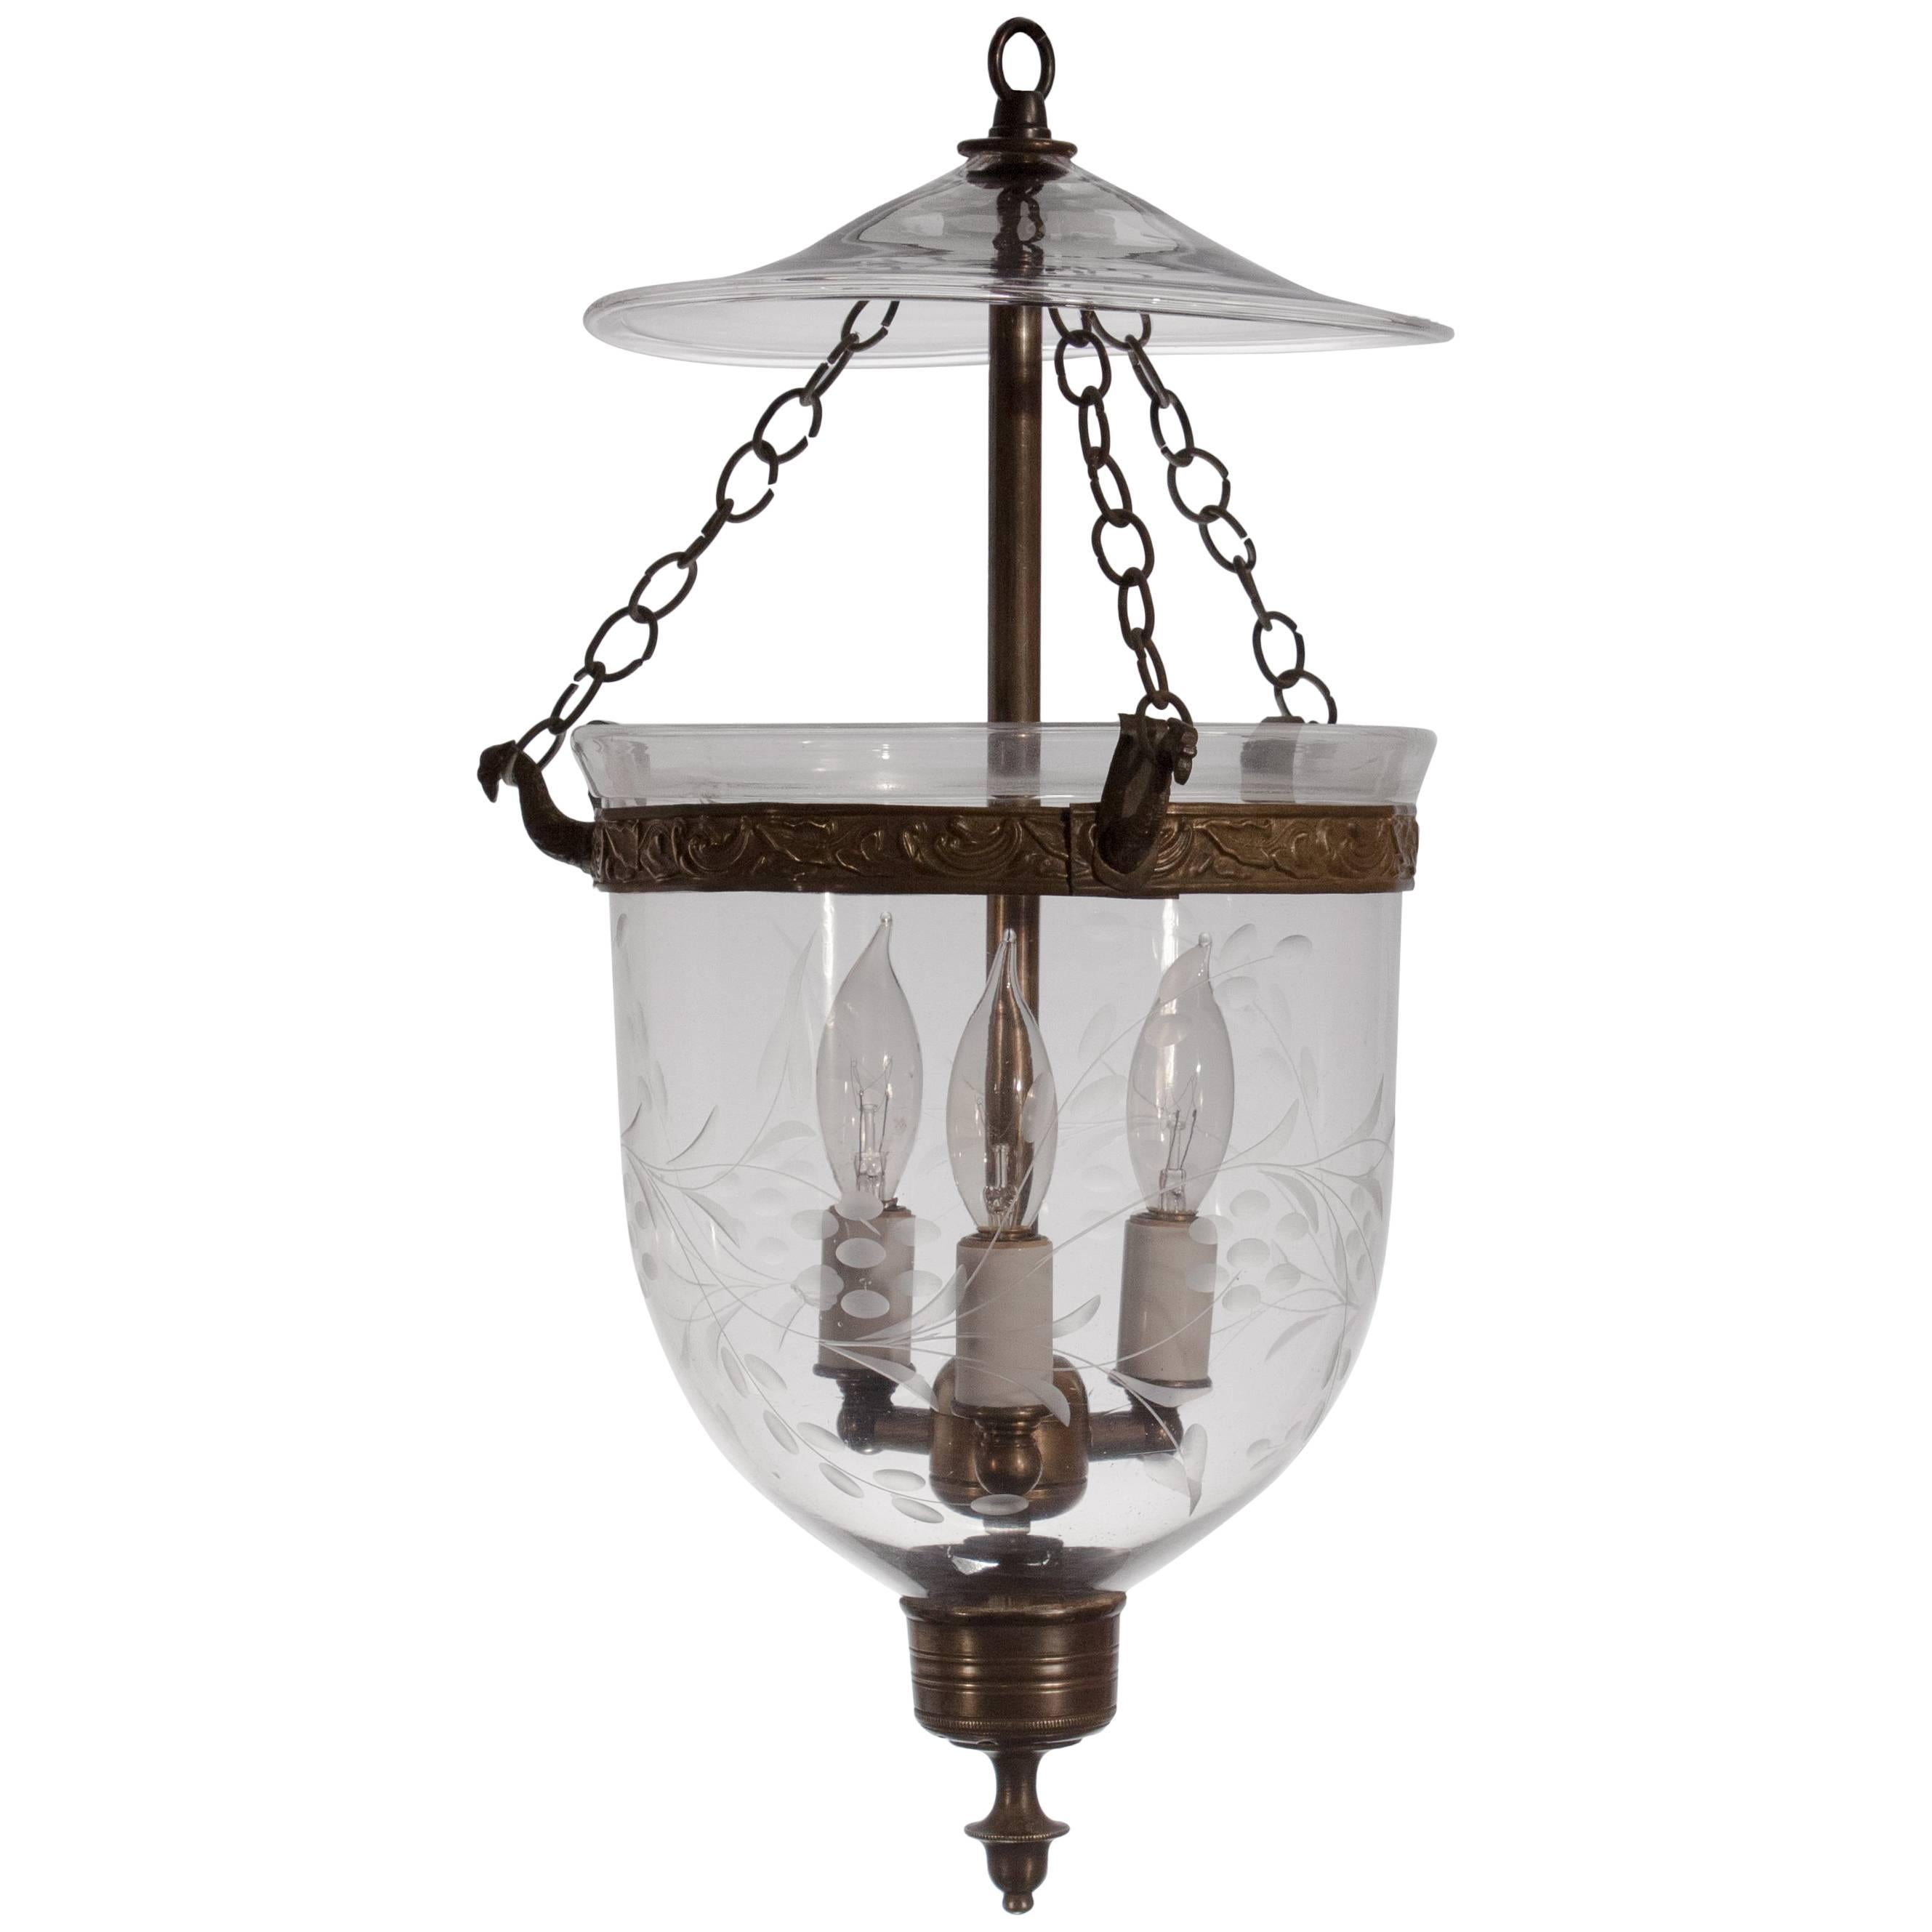 Petite 19th Century Bell Jar Hall Lantern with Vine Etching